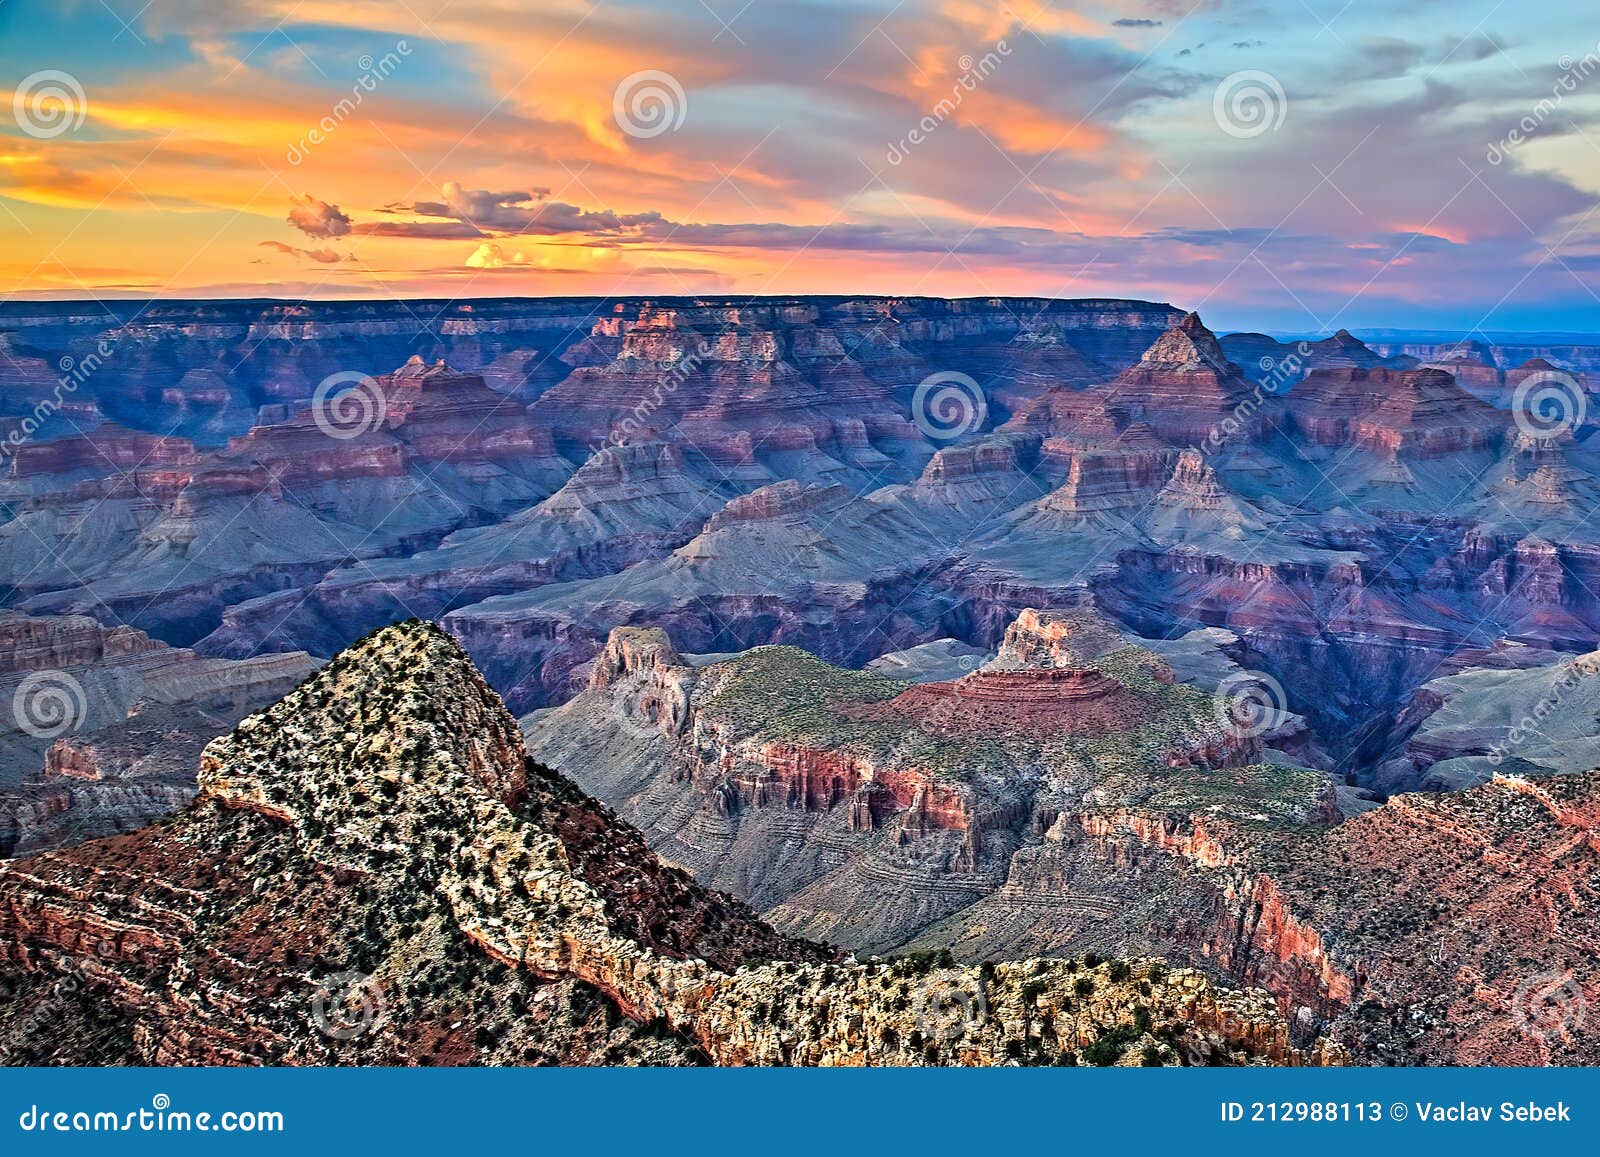 national parks usa southwest grand canyon